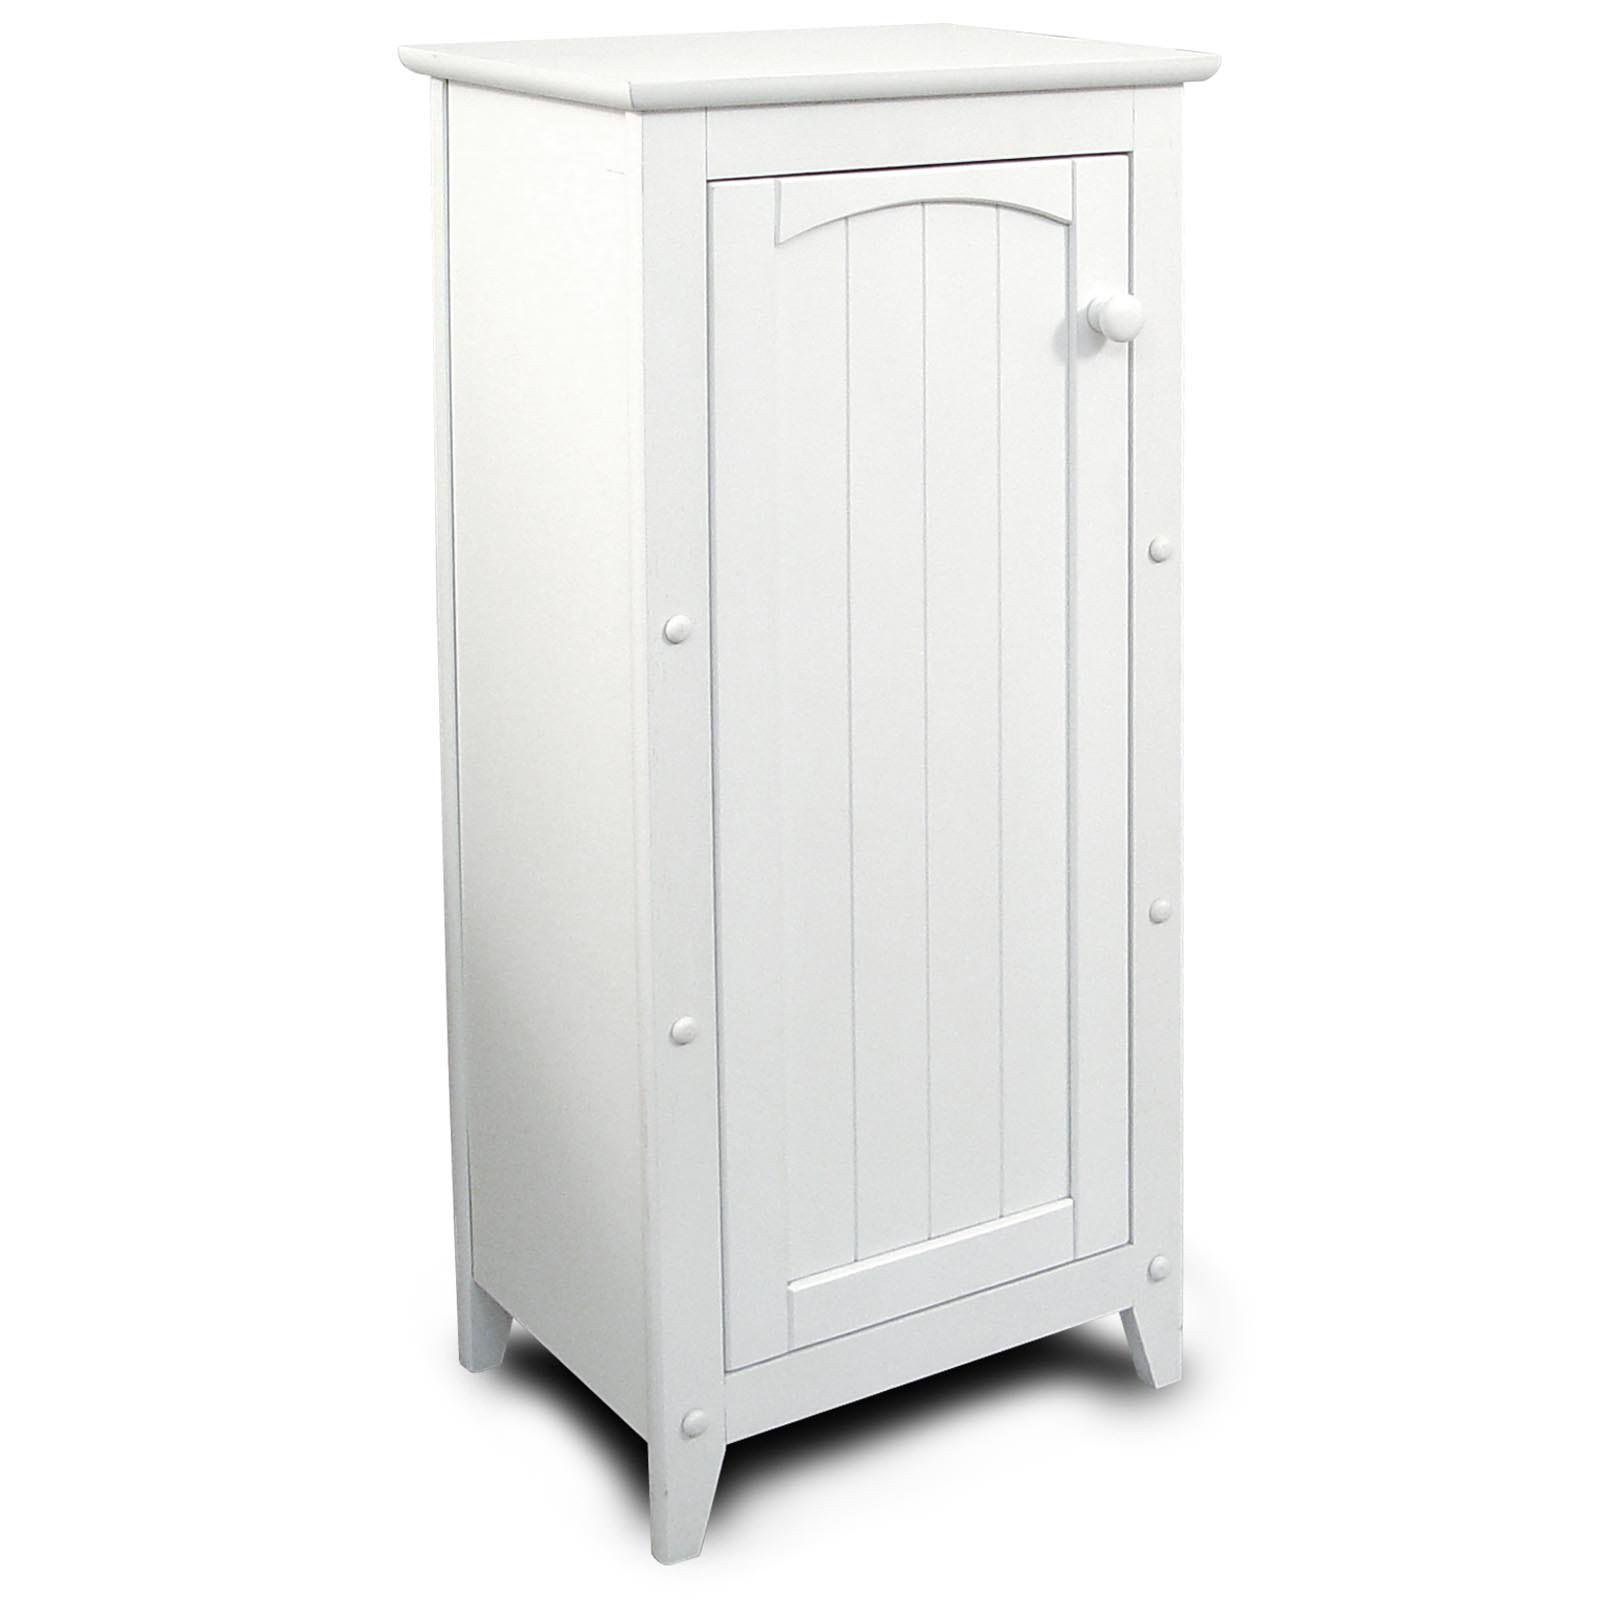 Small Storage Cabinet For Kitchen
 Catskill White All Purpose Kitchen Storage Cabinet